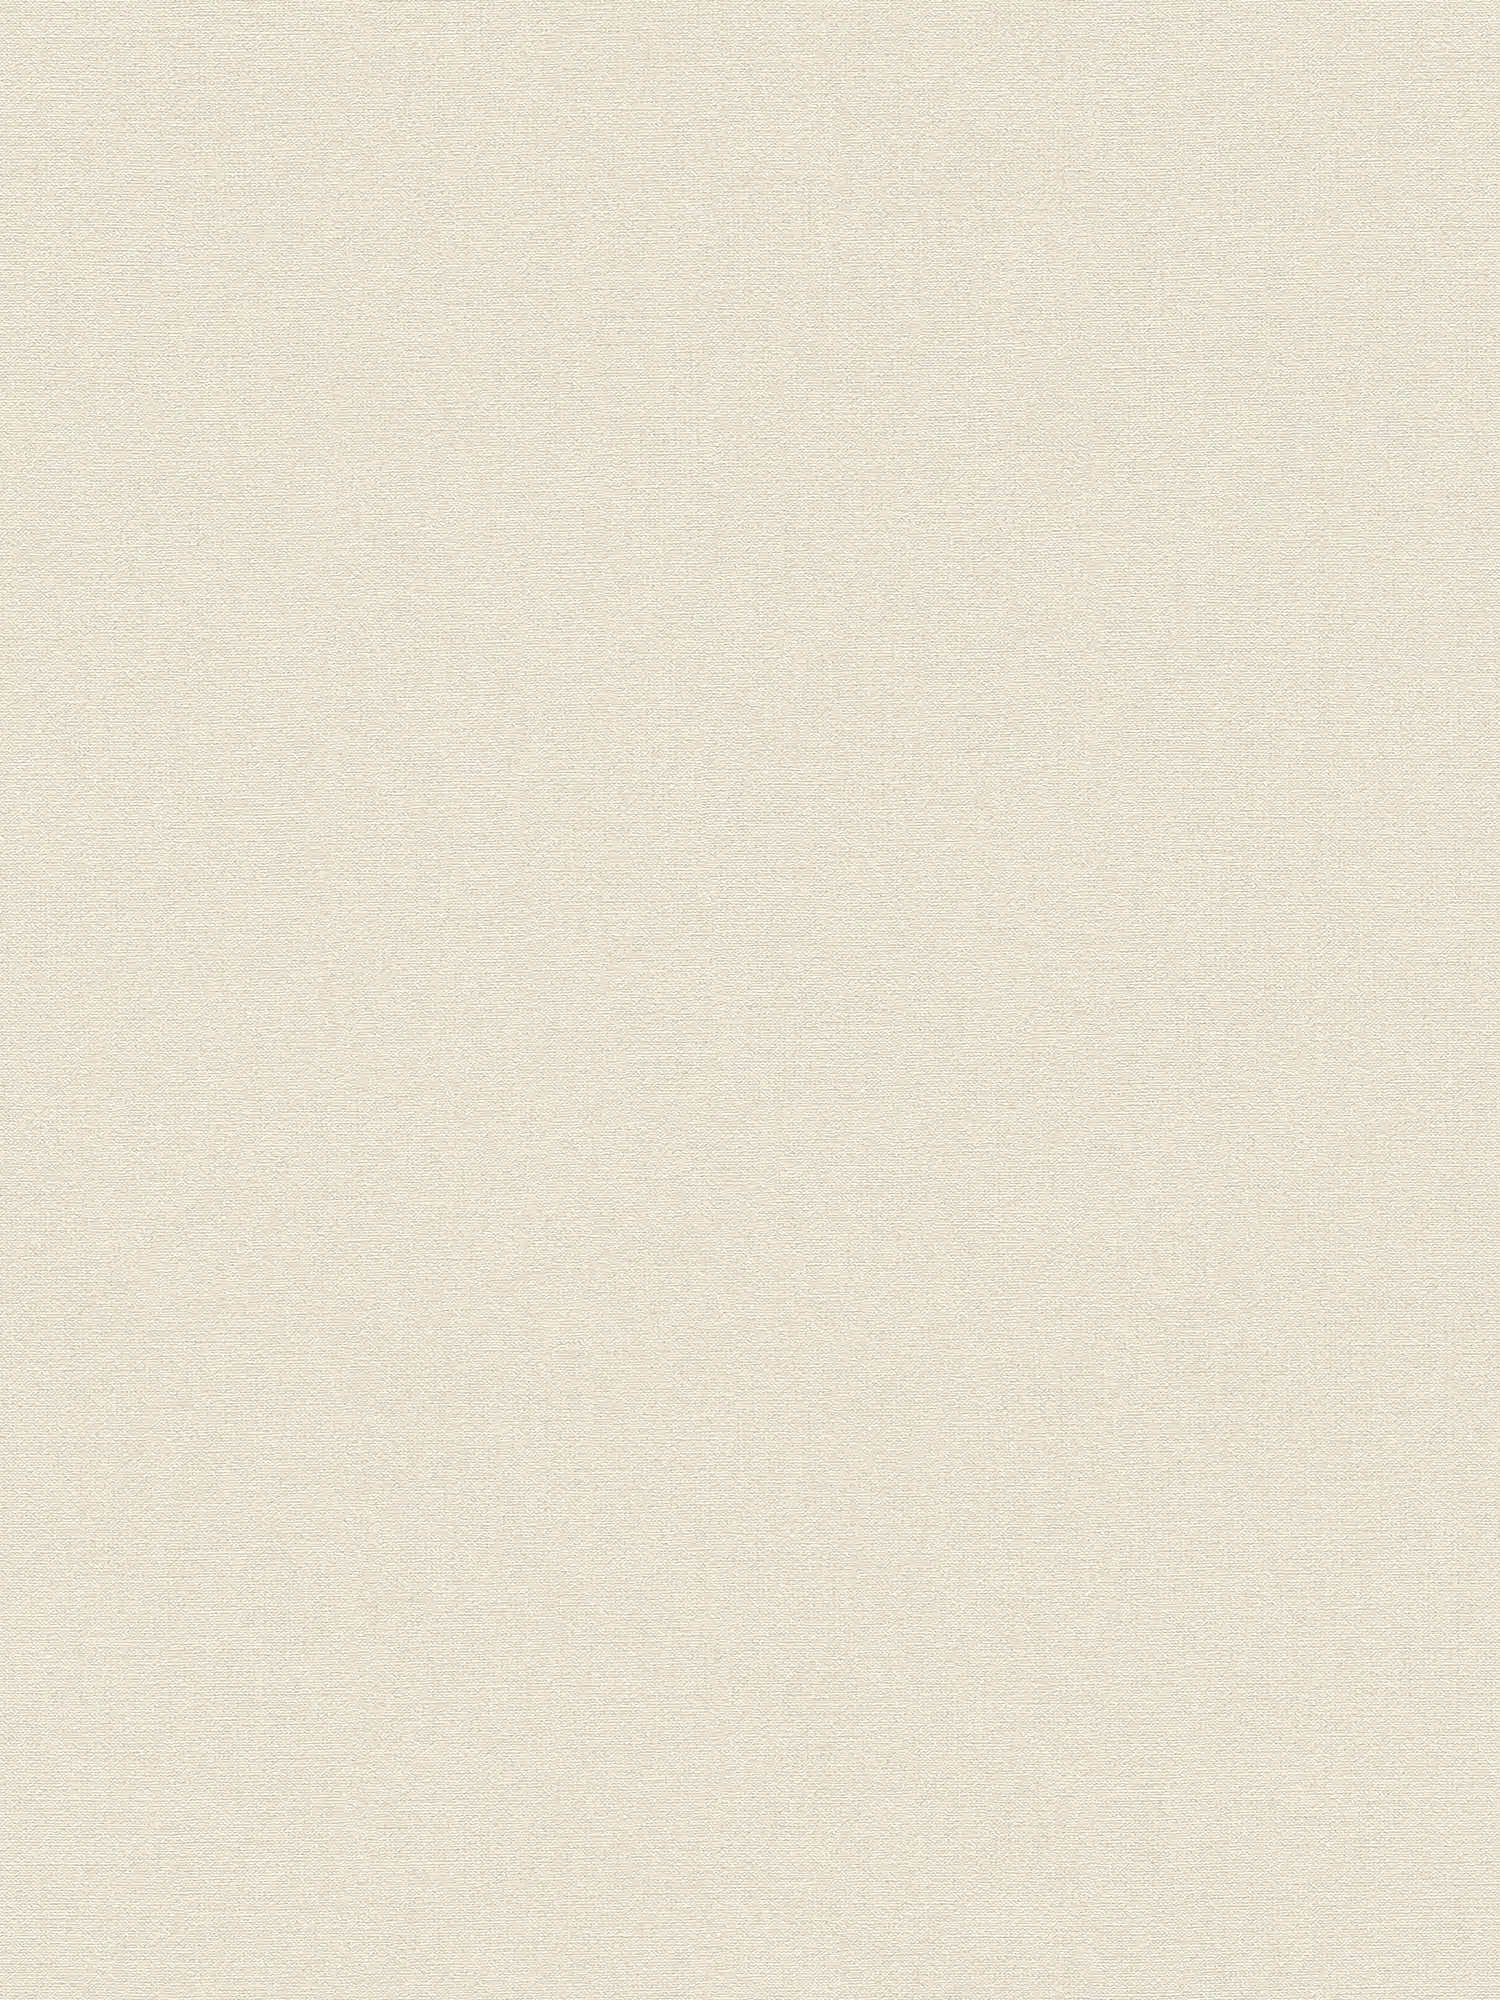 PVC-free plain wallpaper with linen look - beige, white
